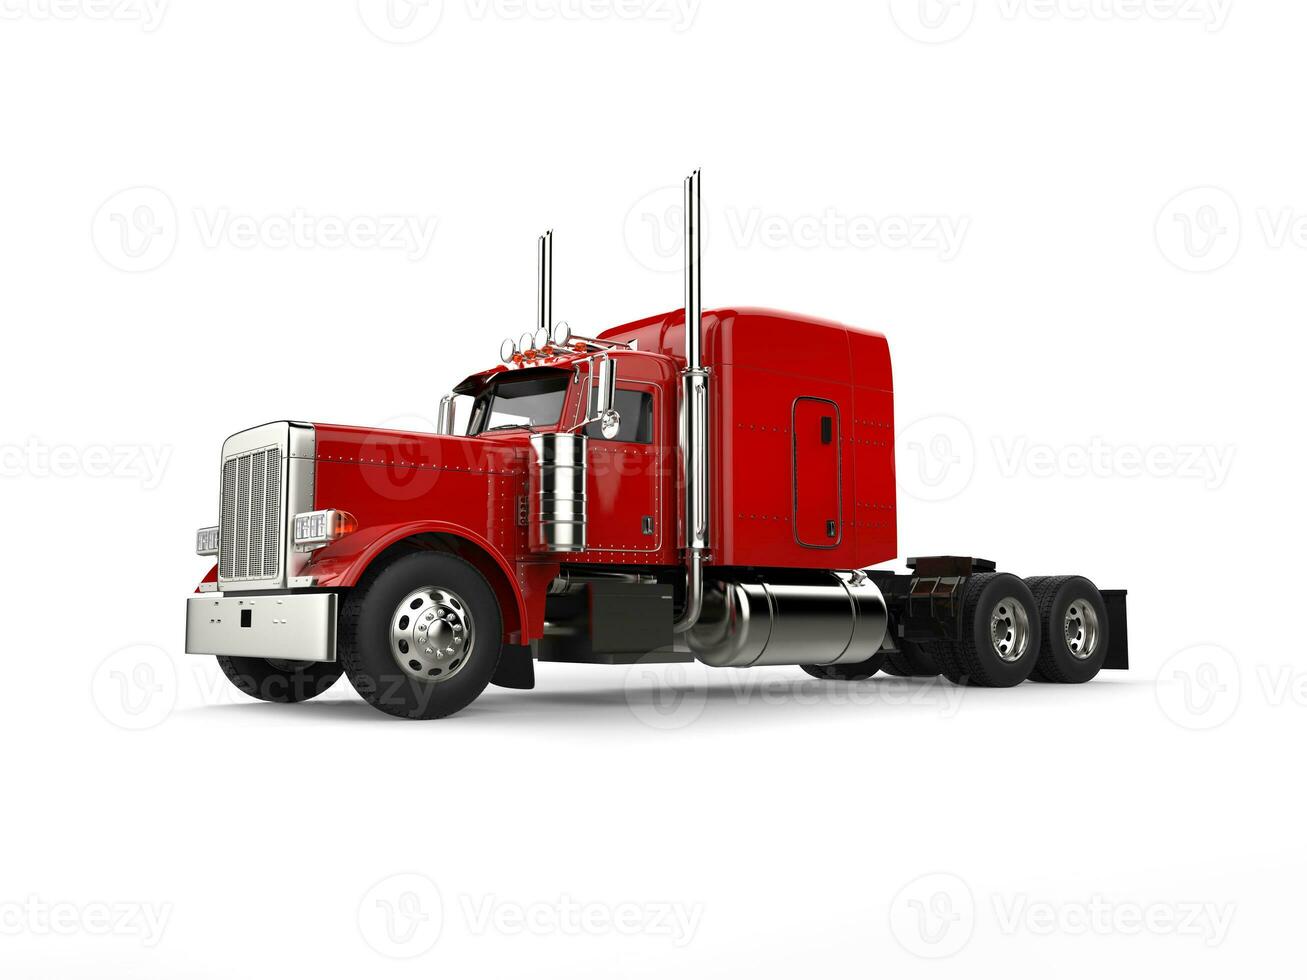 Raging red classic 18 wheeler big truck - beauty shot photo